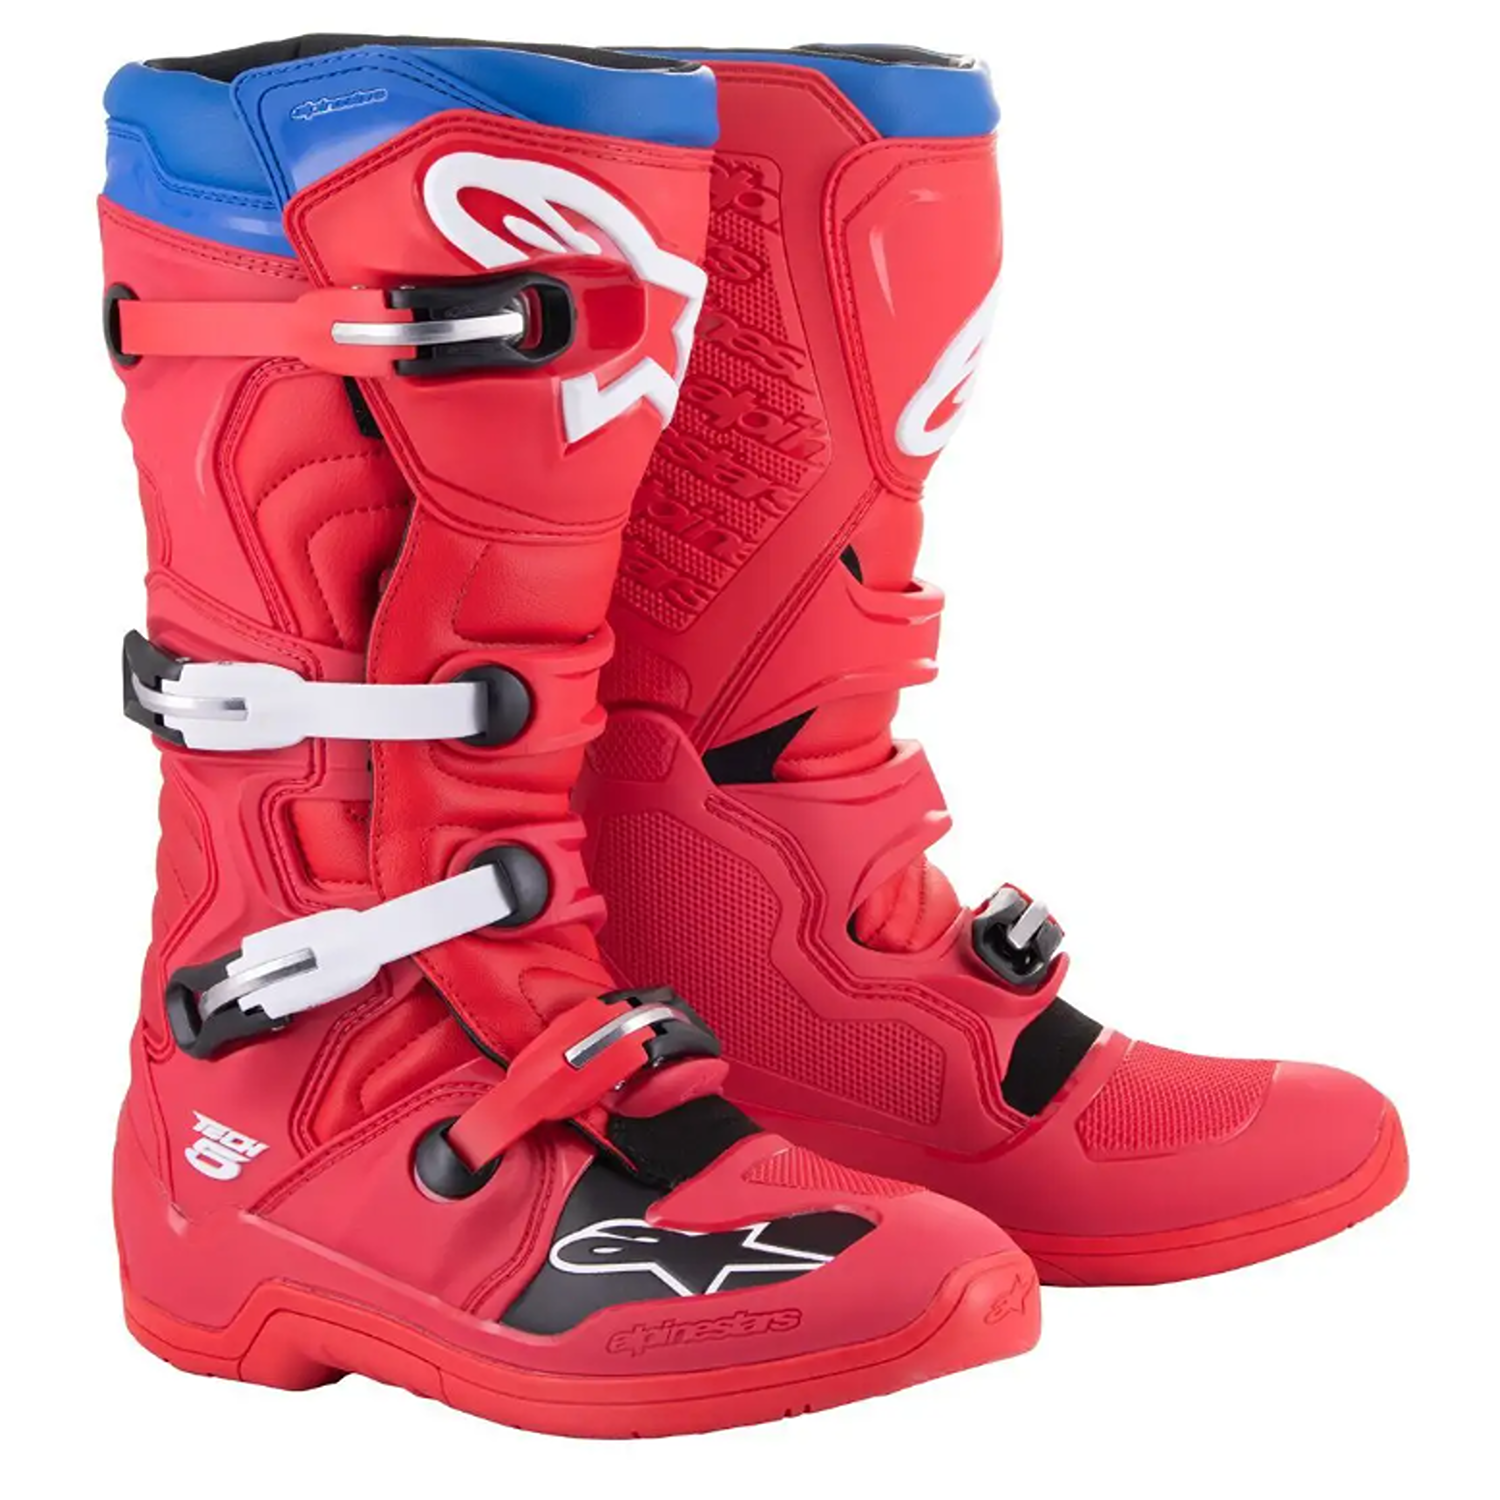 Image of Alpinestars Tech 5 Boots Bright Red Dark Red Blue Size US 5 EN